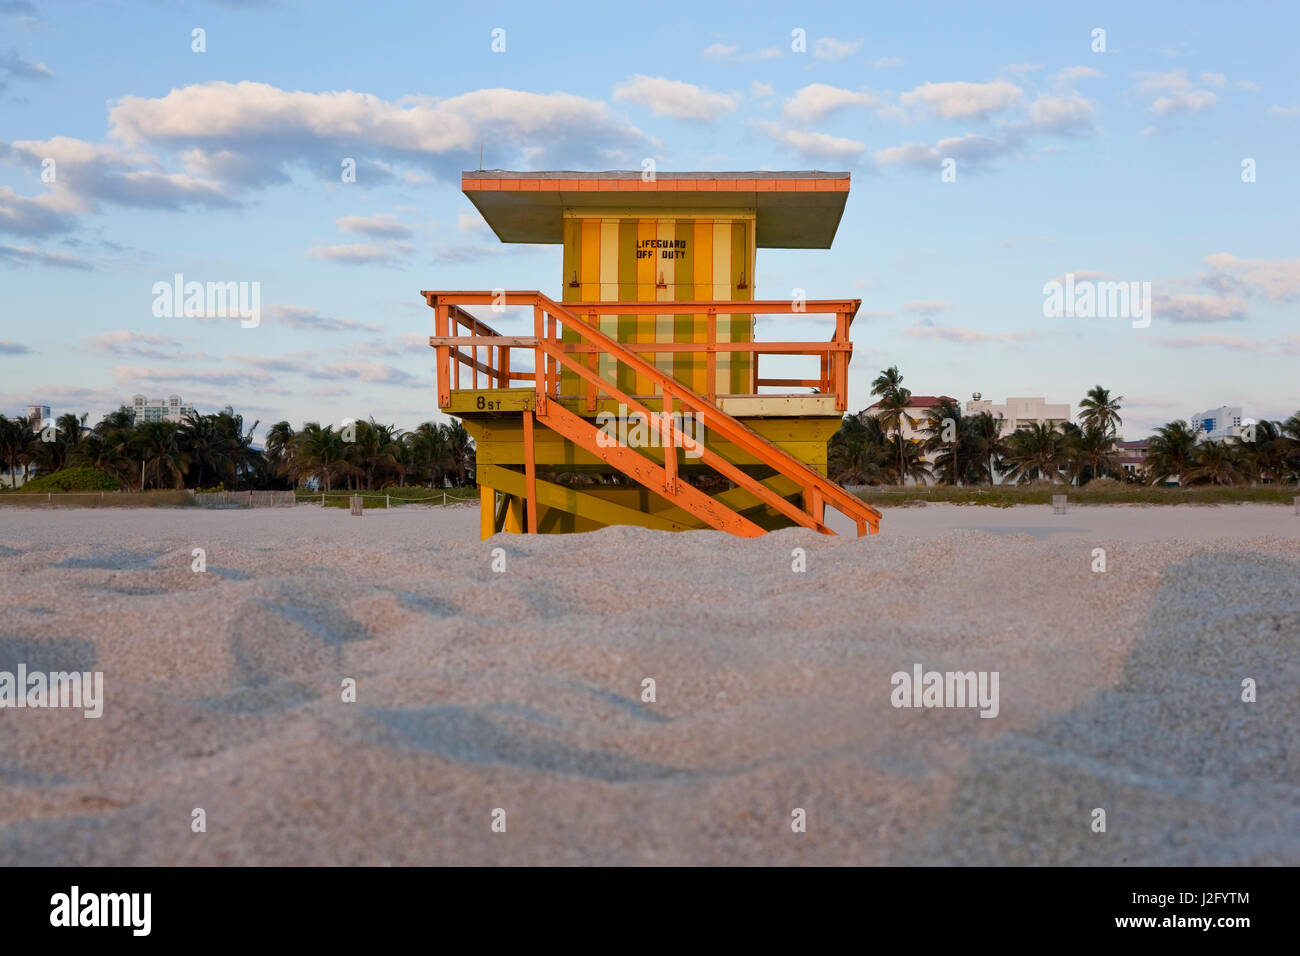 Lifeguard hut, South Beach, Miami, Florida, USA Stock Photo